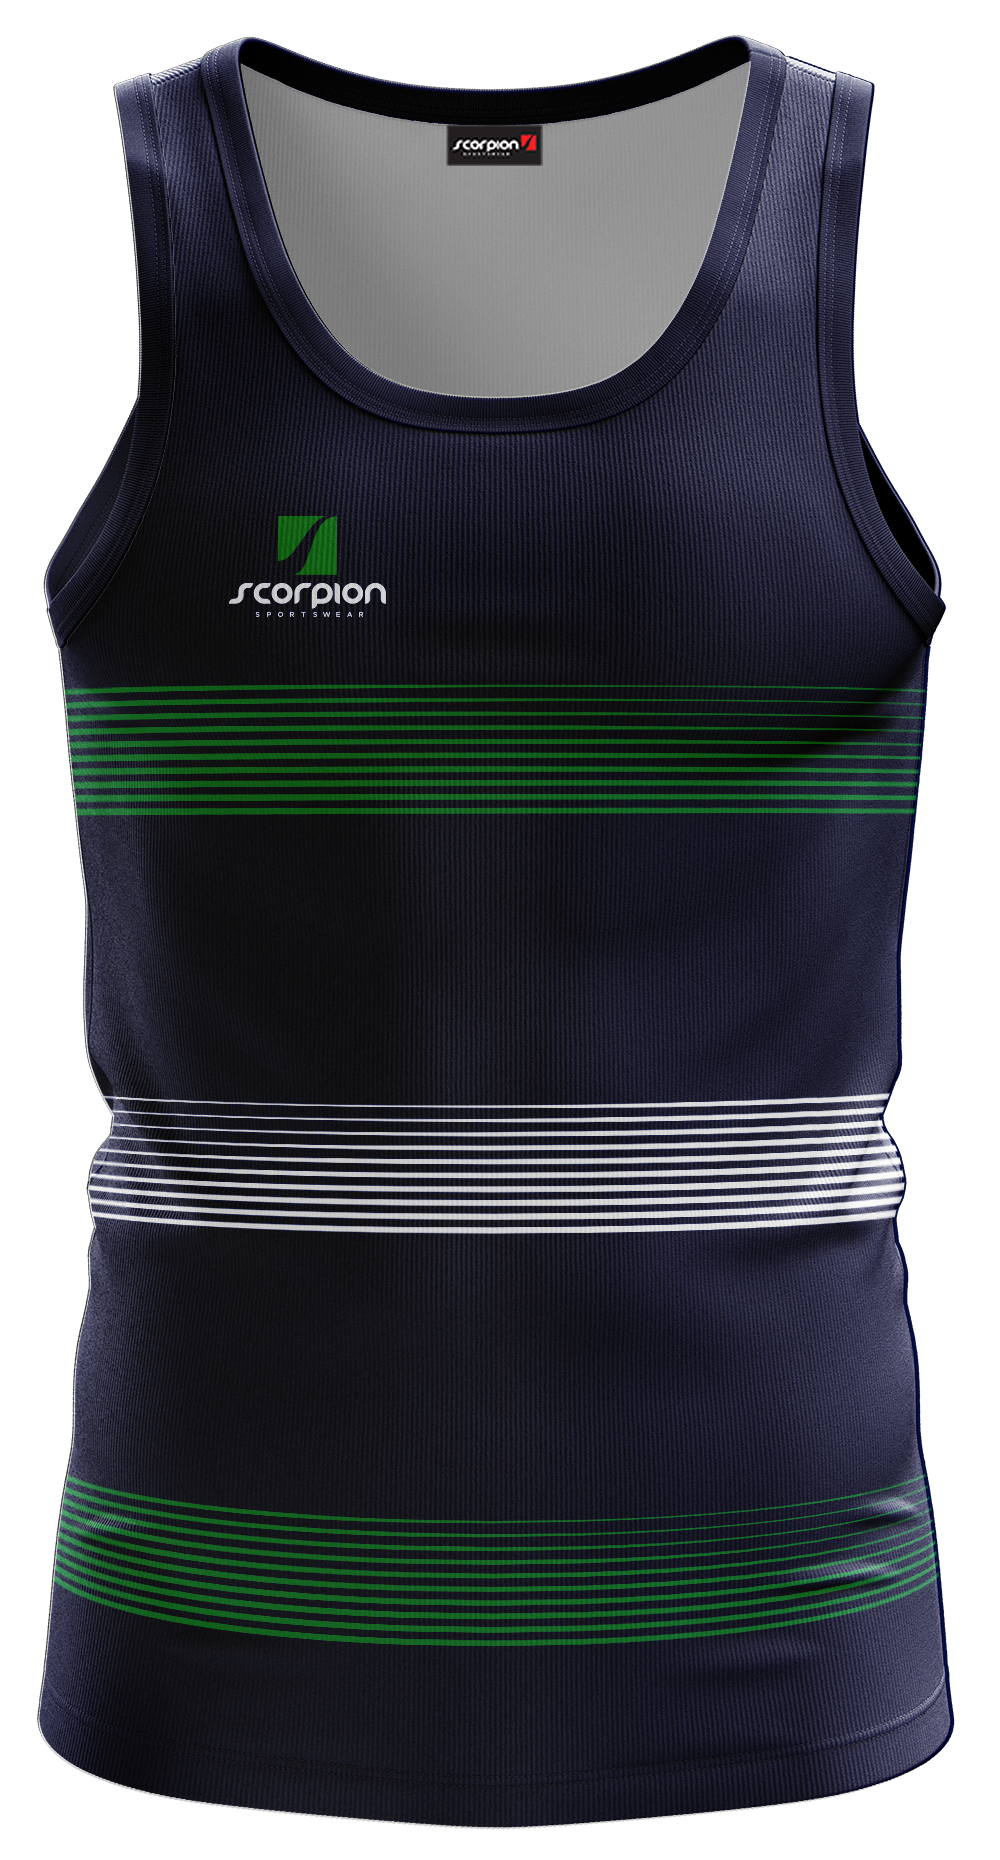 Scorpion Vests Pattern 2 - Navy/Green/White